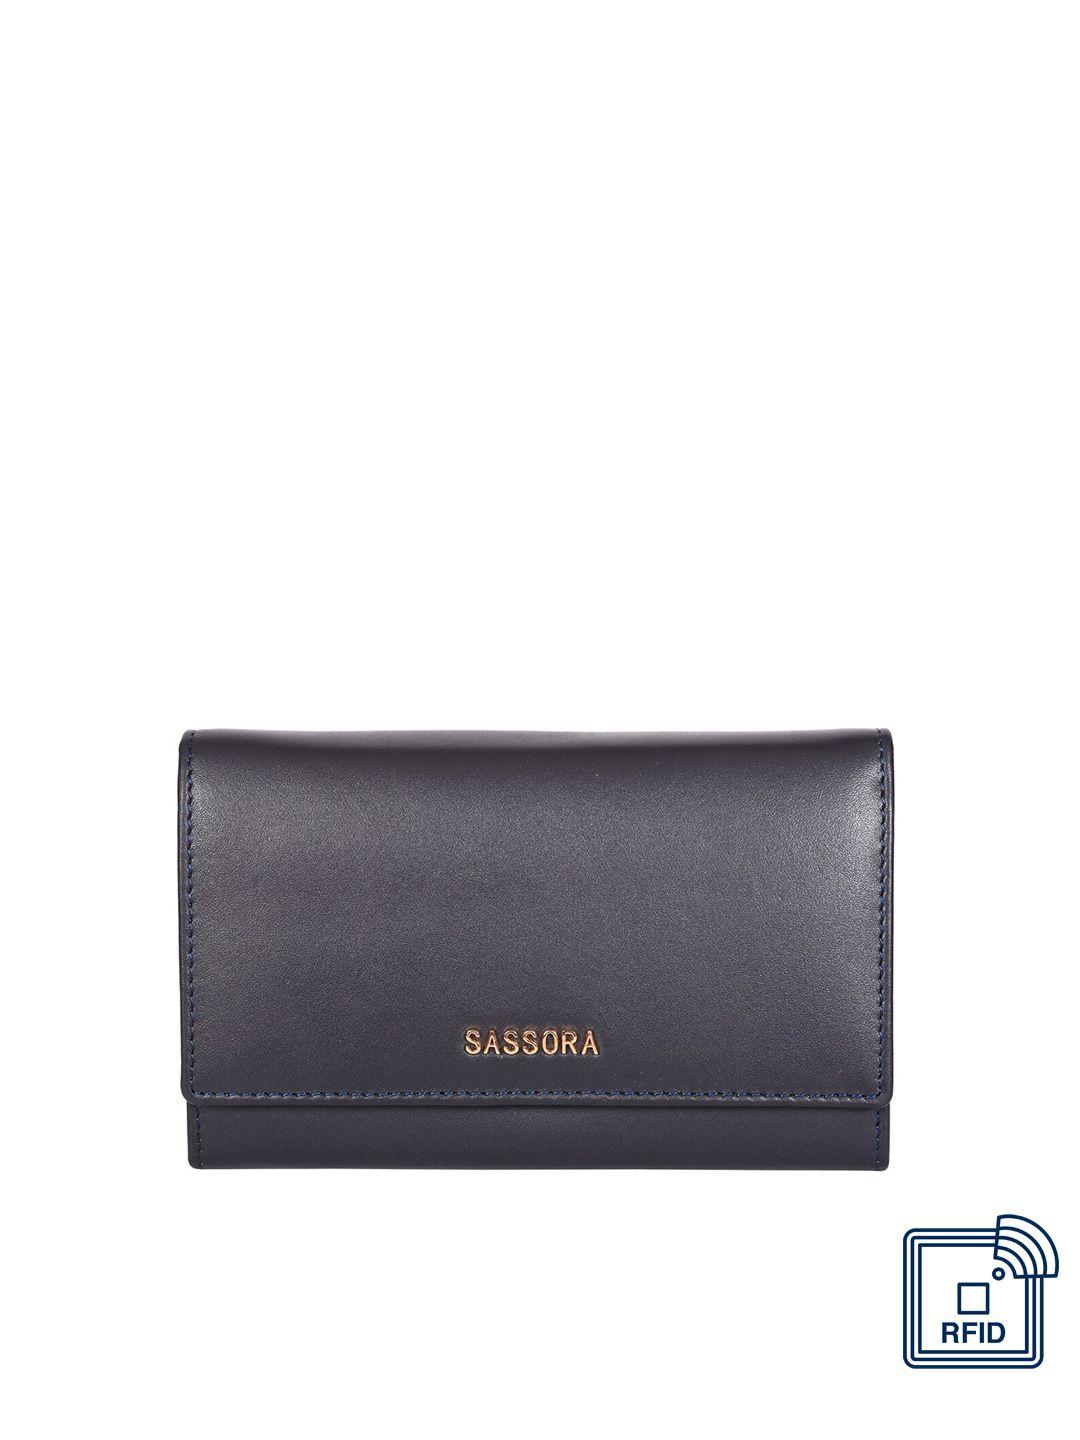 sassora women leather envelope purse